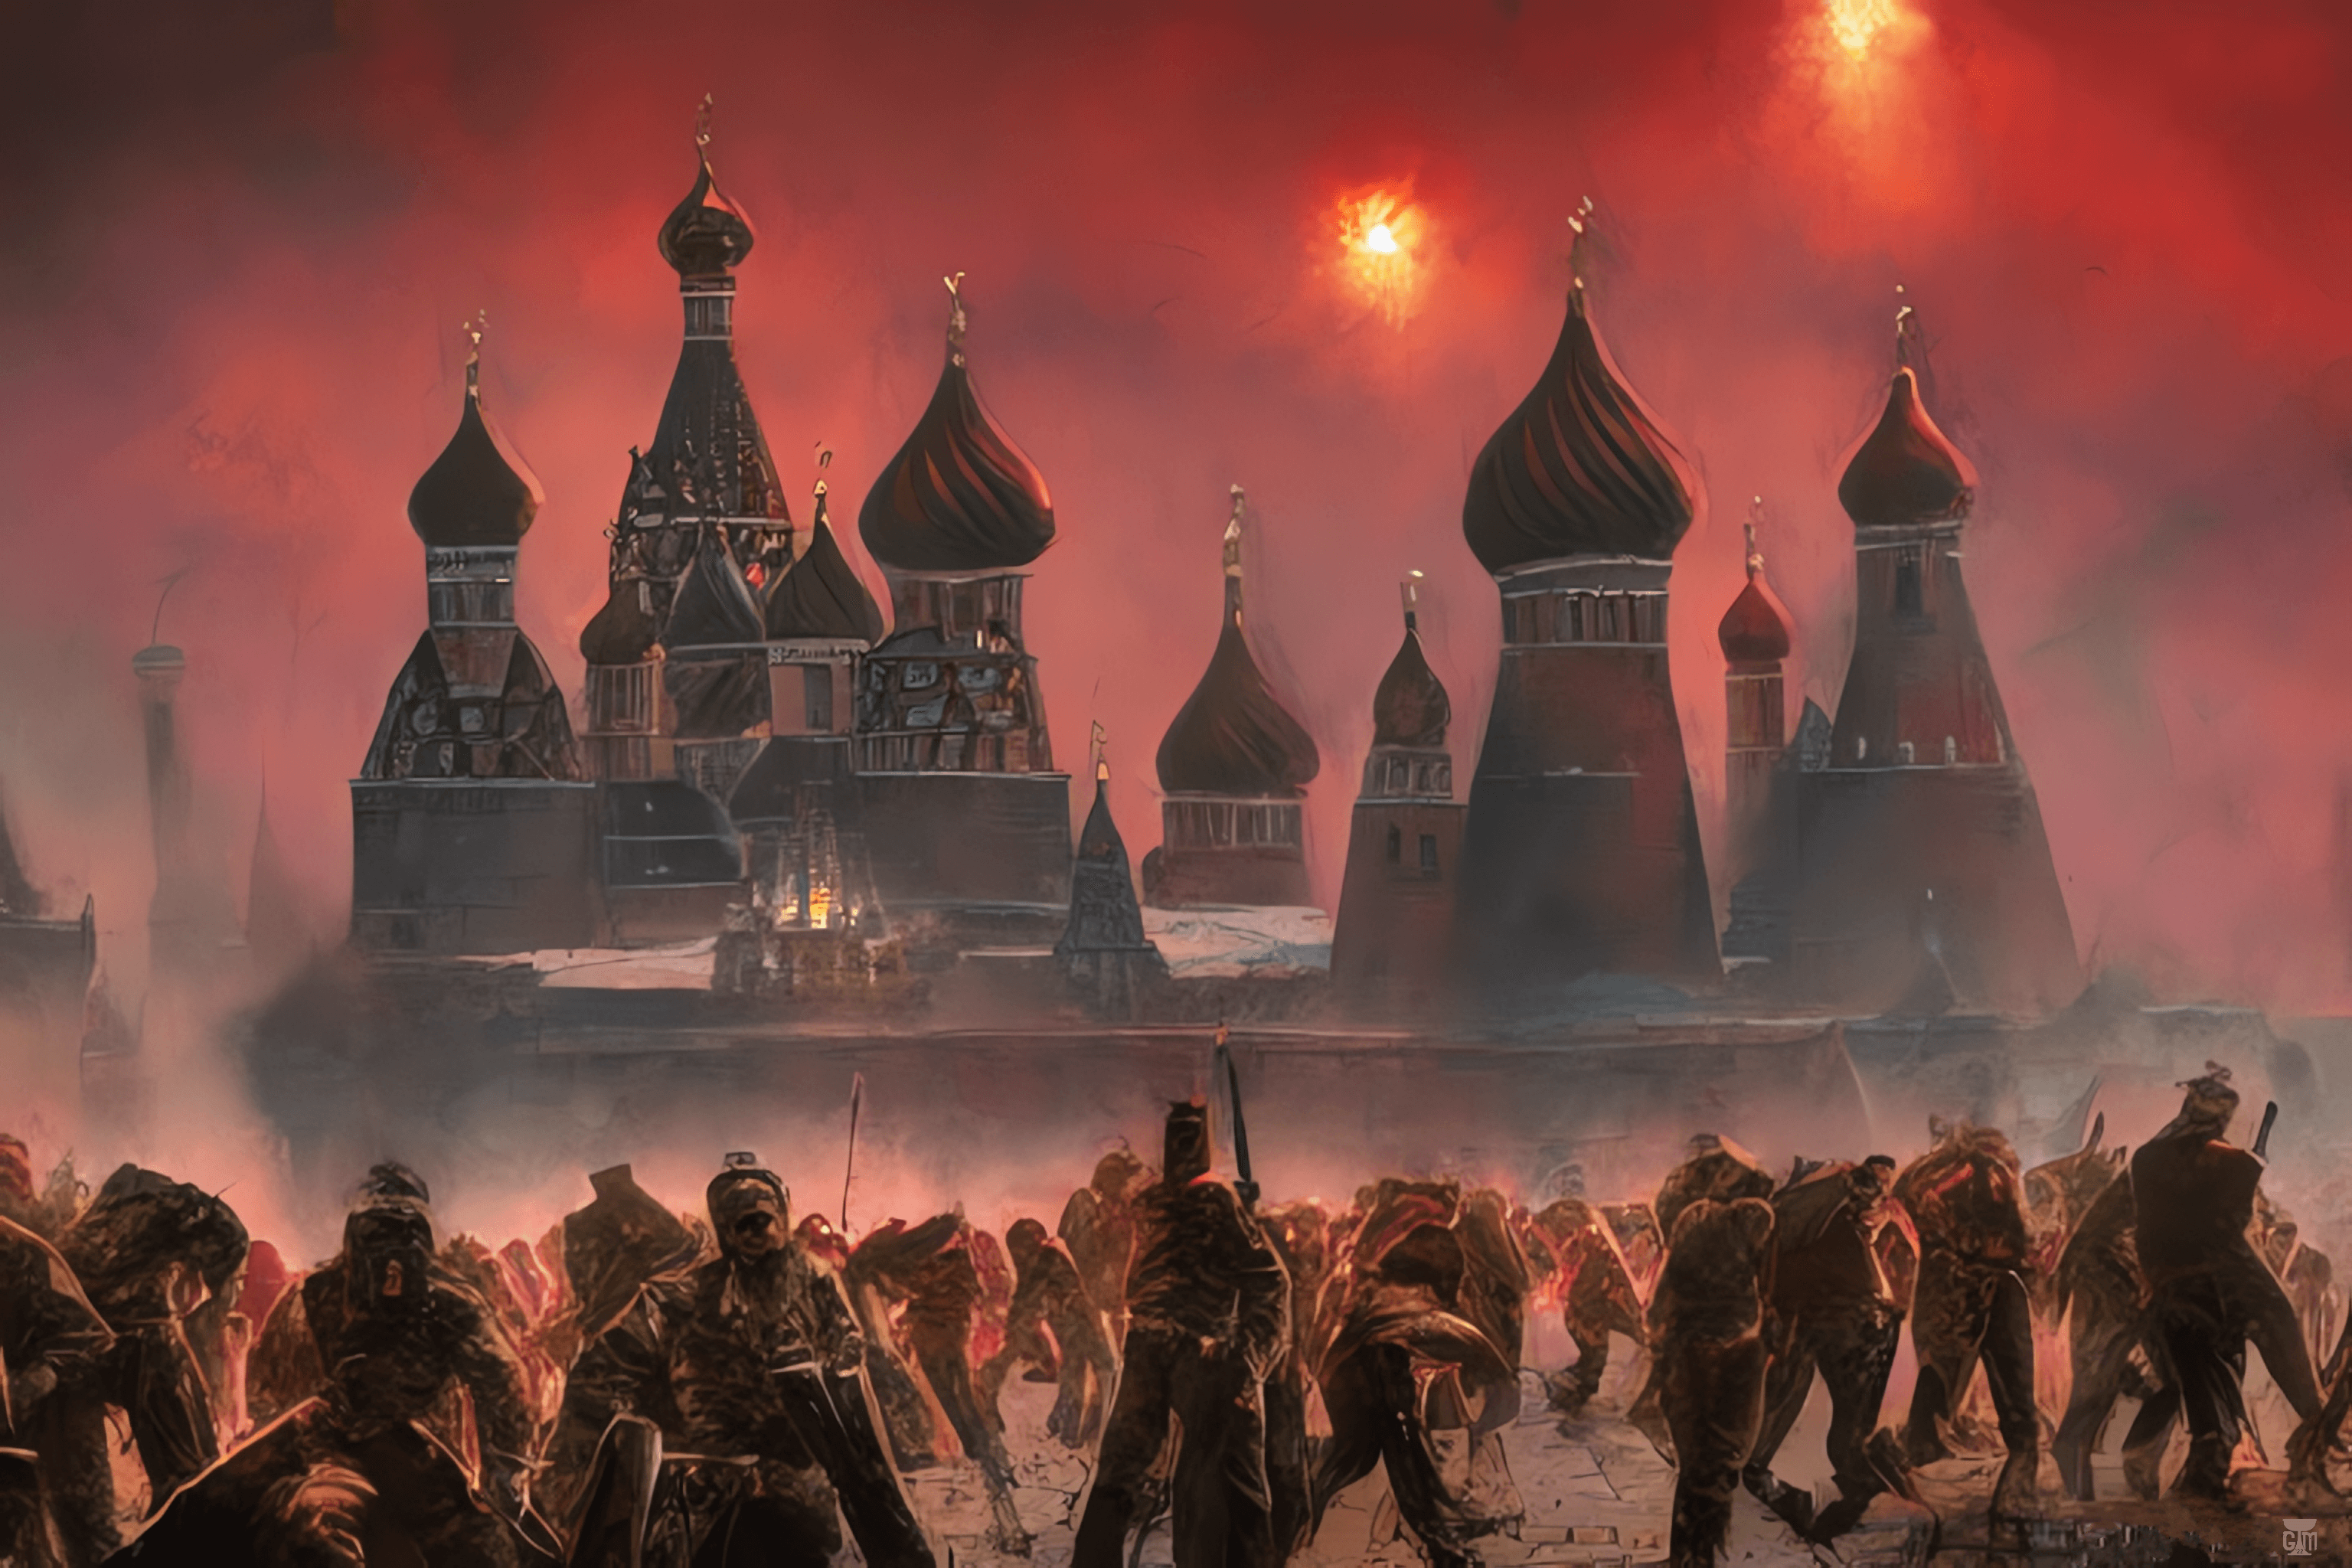 The Kremlin Zombie apocalypse 08 3072 - The Kremlin ahead